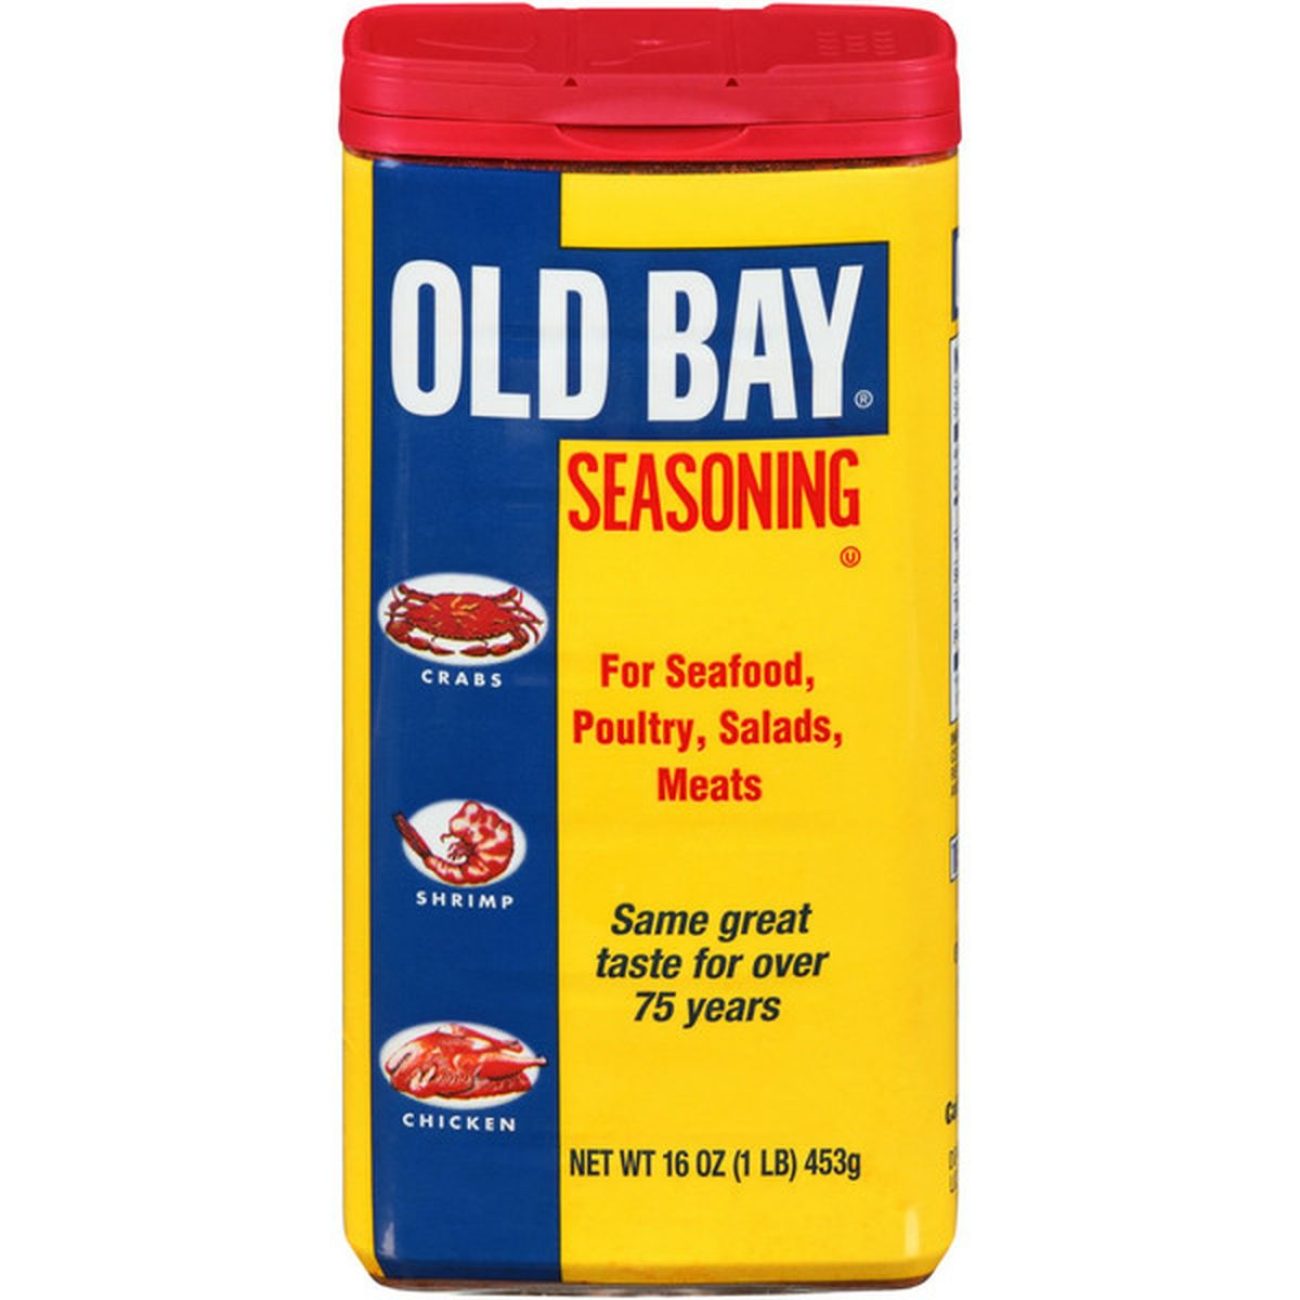 Old Bay Seasoning #2